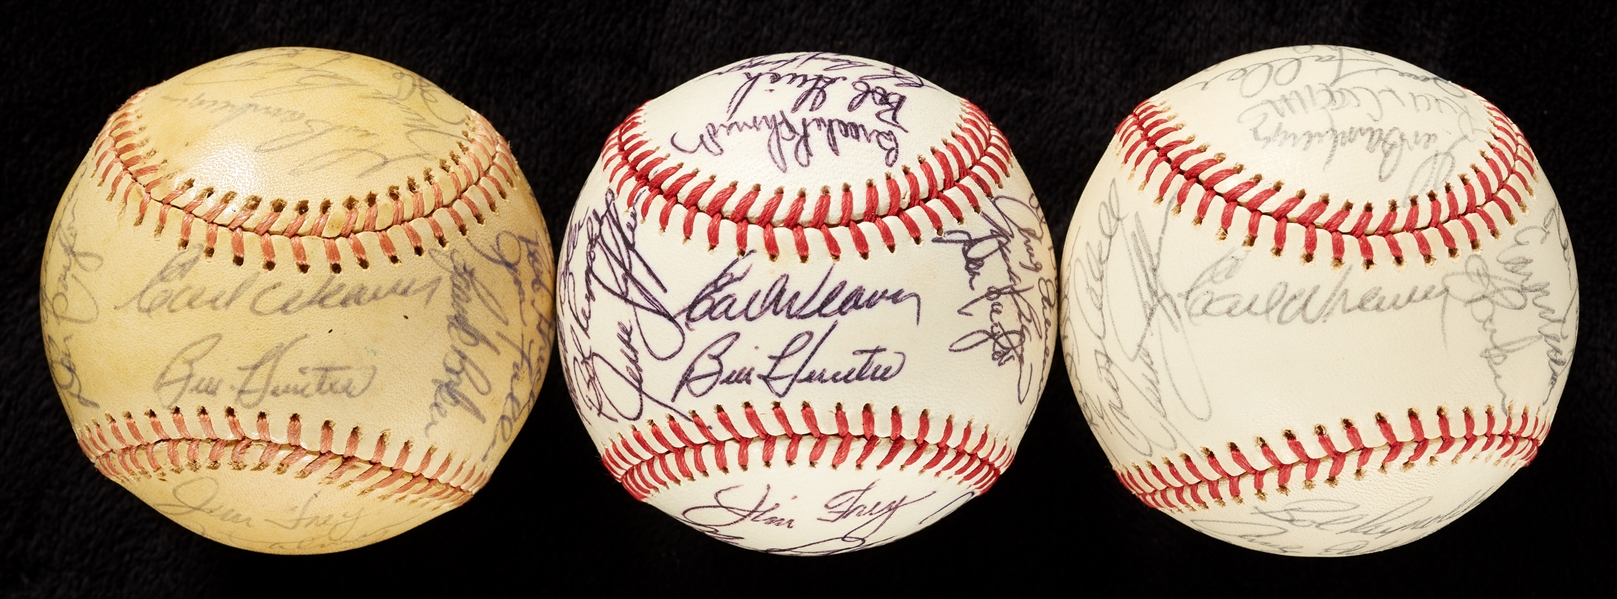 1974 Baltimore Orioles Team-Signed Baseballs Group (3)